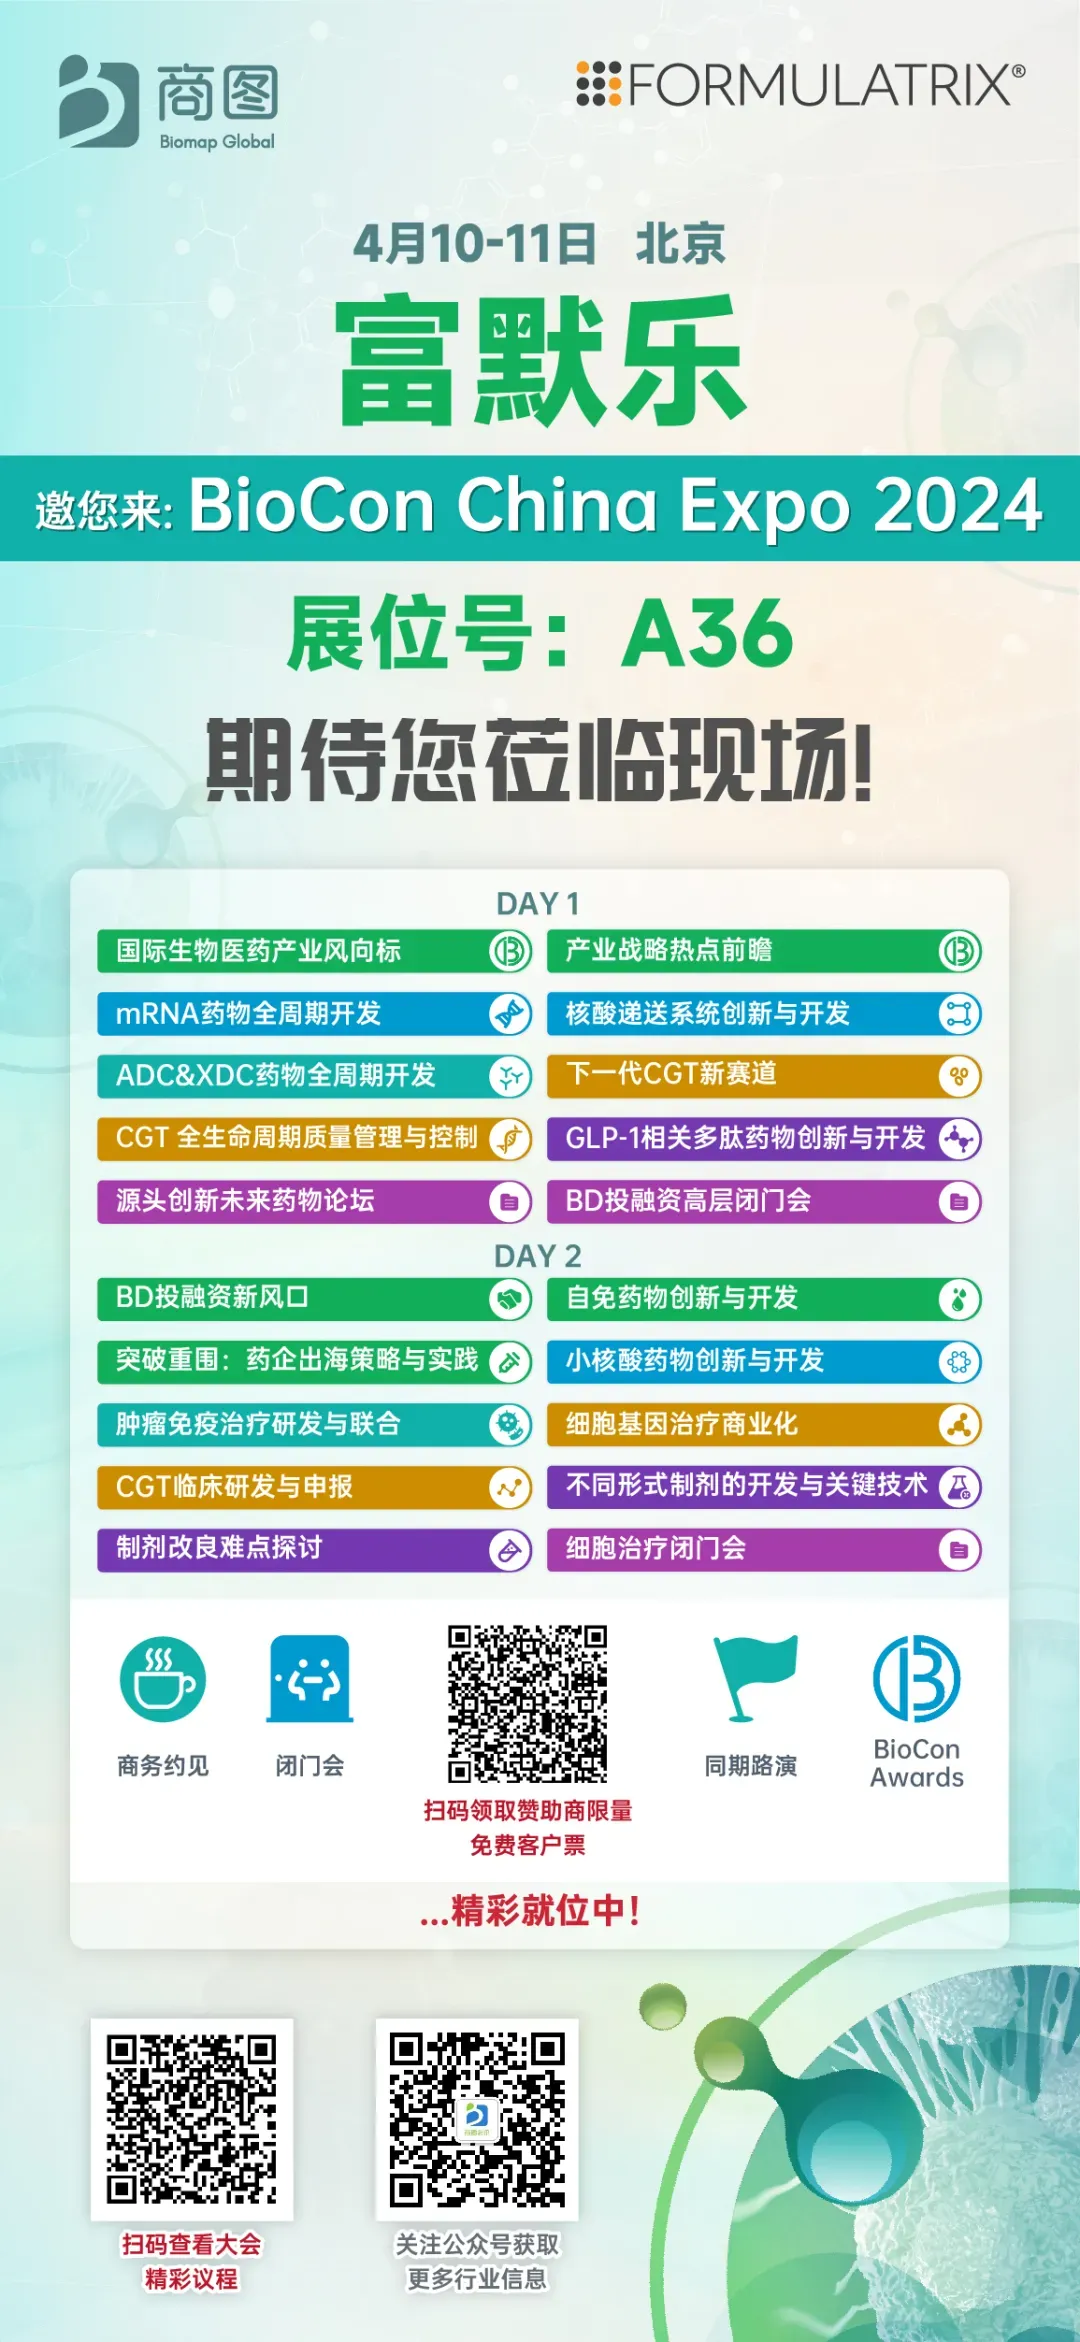 Formulatrix 富默乐中国邀您共赴4.10-11 第十一届BioCon China Expo